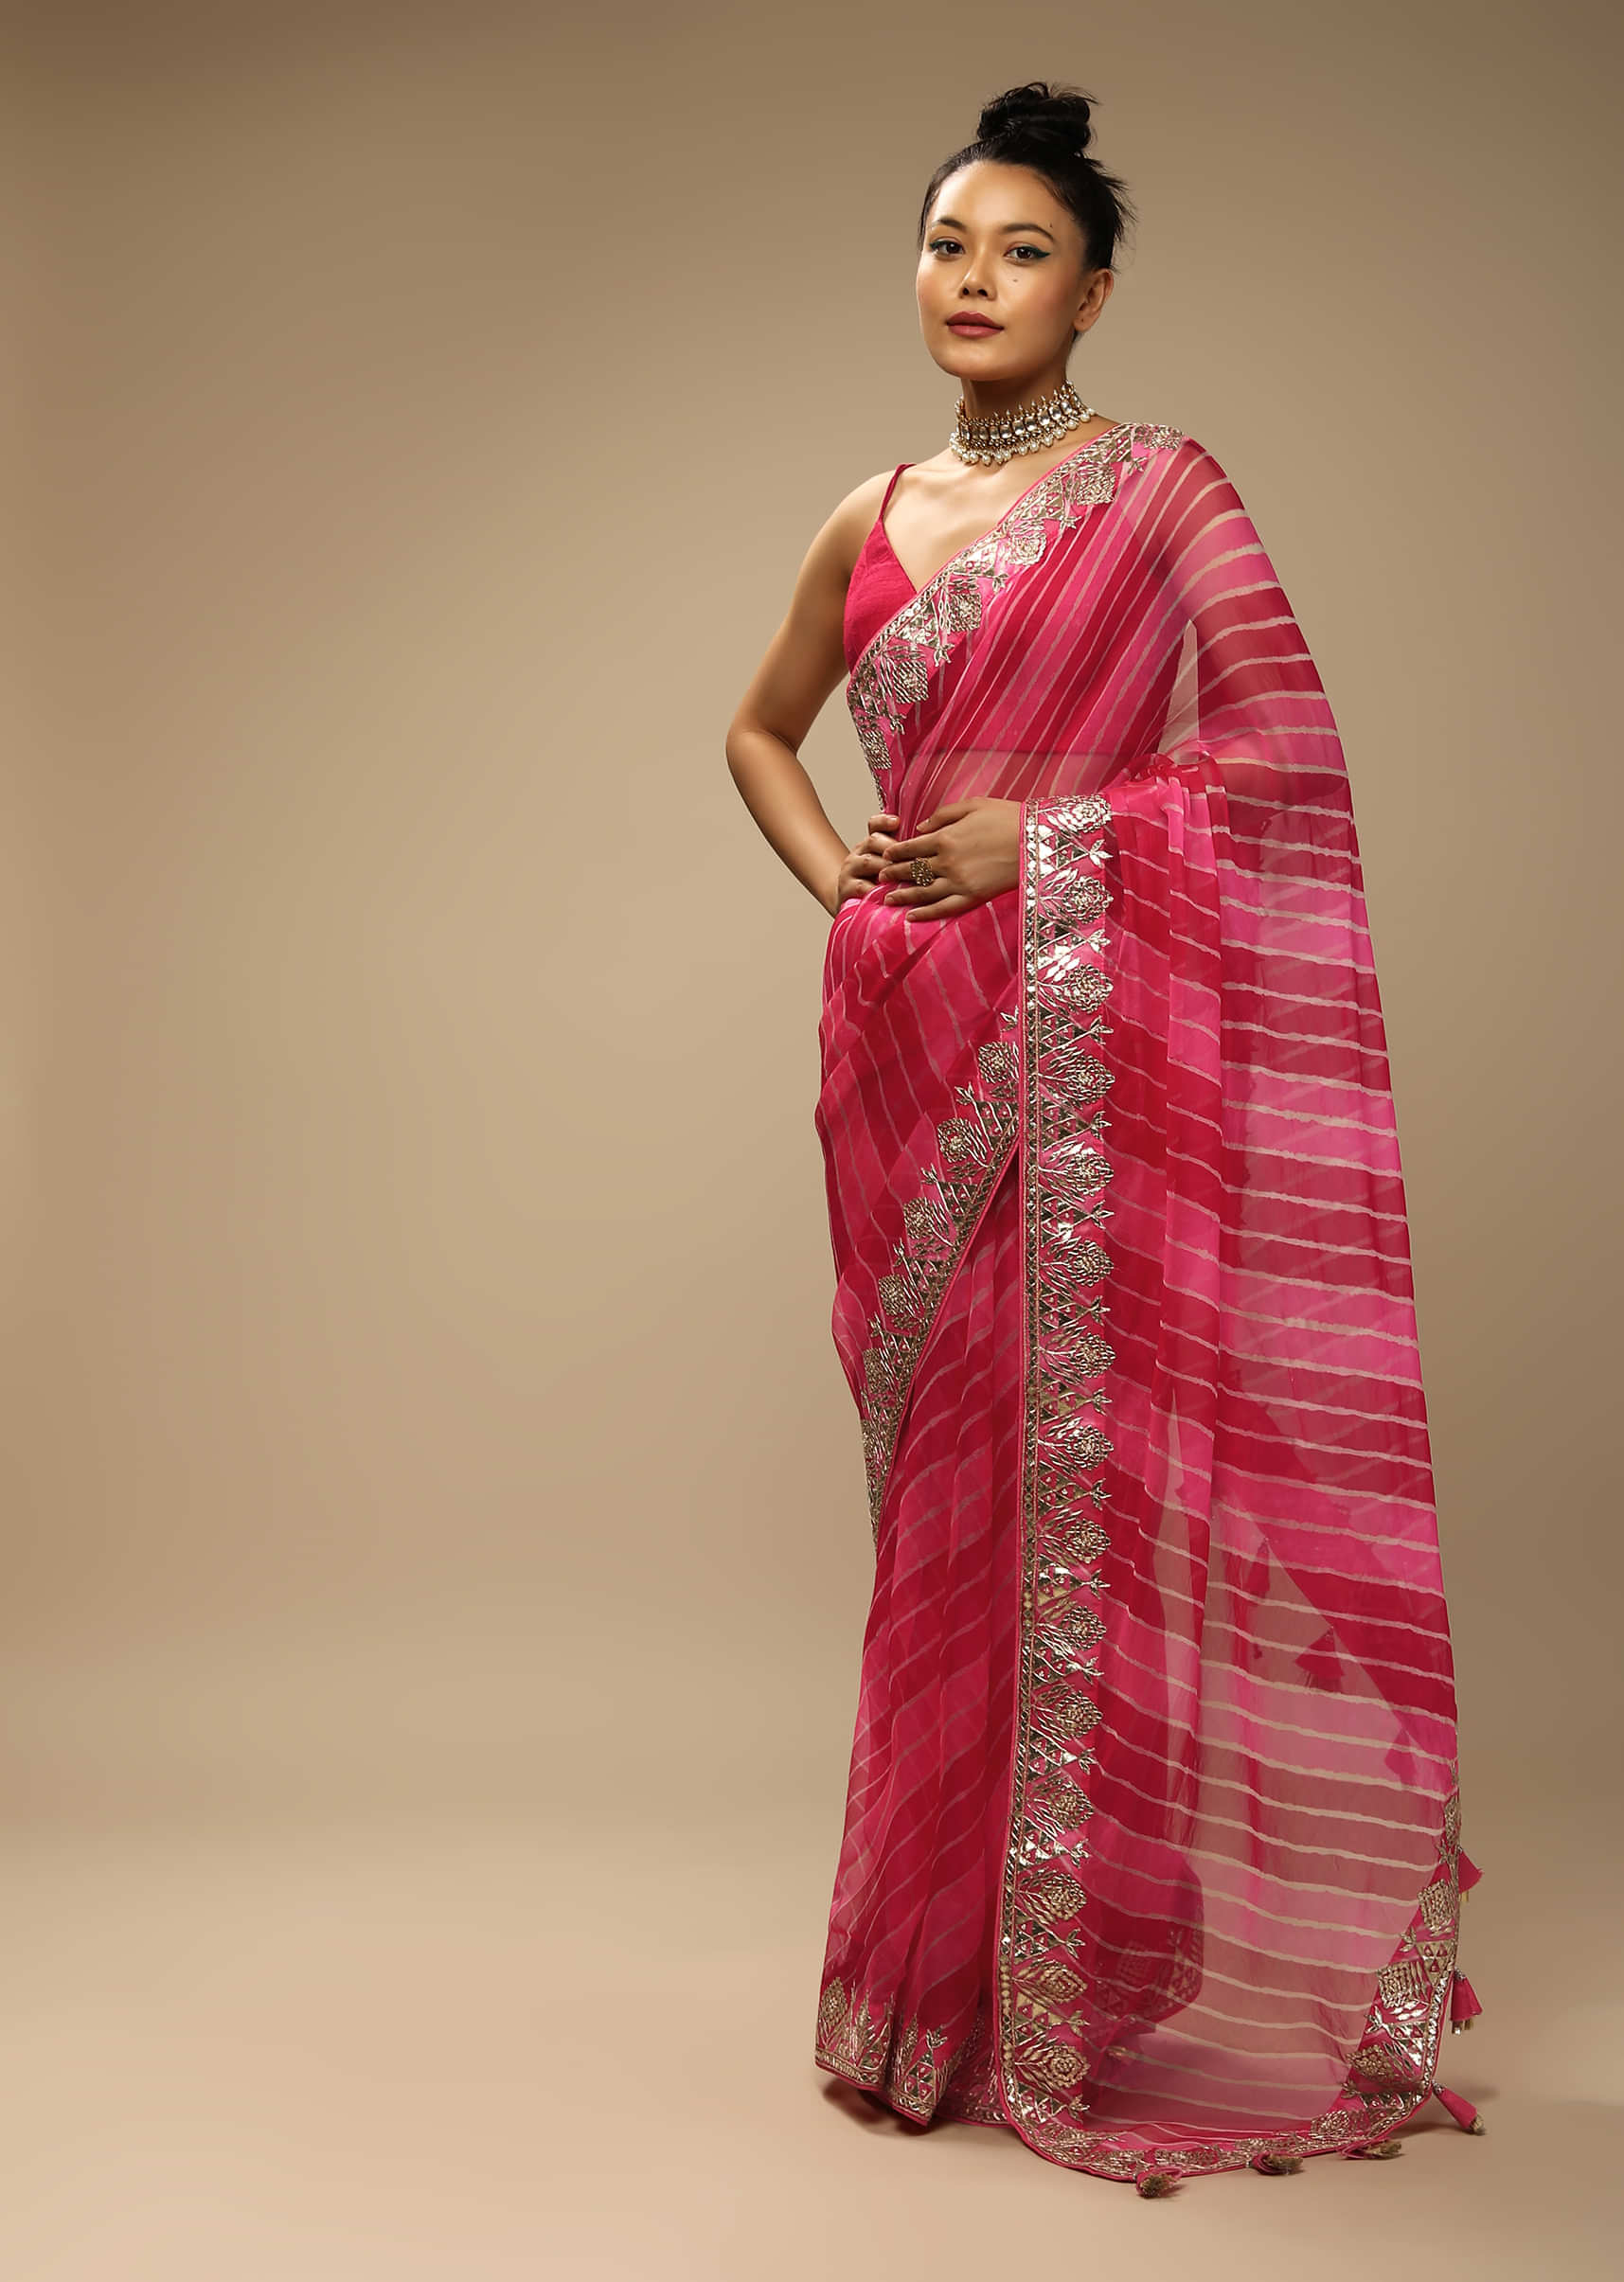 Rani Pink And Fuchsia Dual Toned Saree In Organza With Lehariya Print And Gotta Patti Embroidered Geometric Floral Border